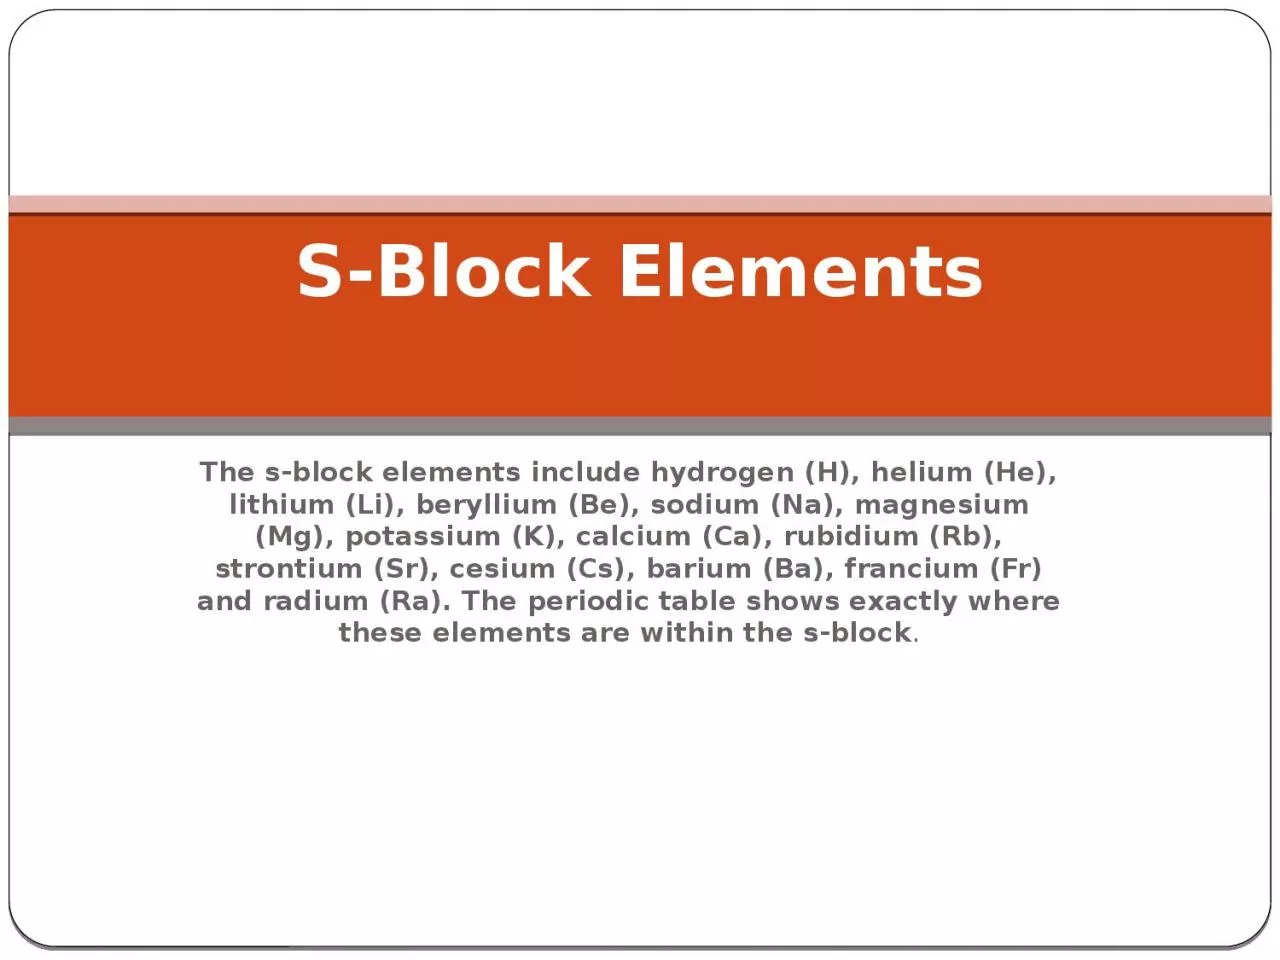 The s-block elements include hydrogen (H), helium (He), lithium (Li), beryllium (Be),